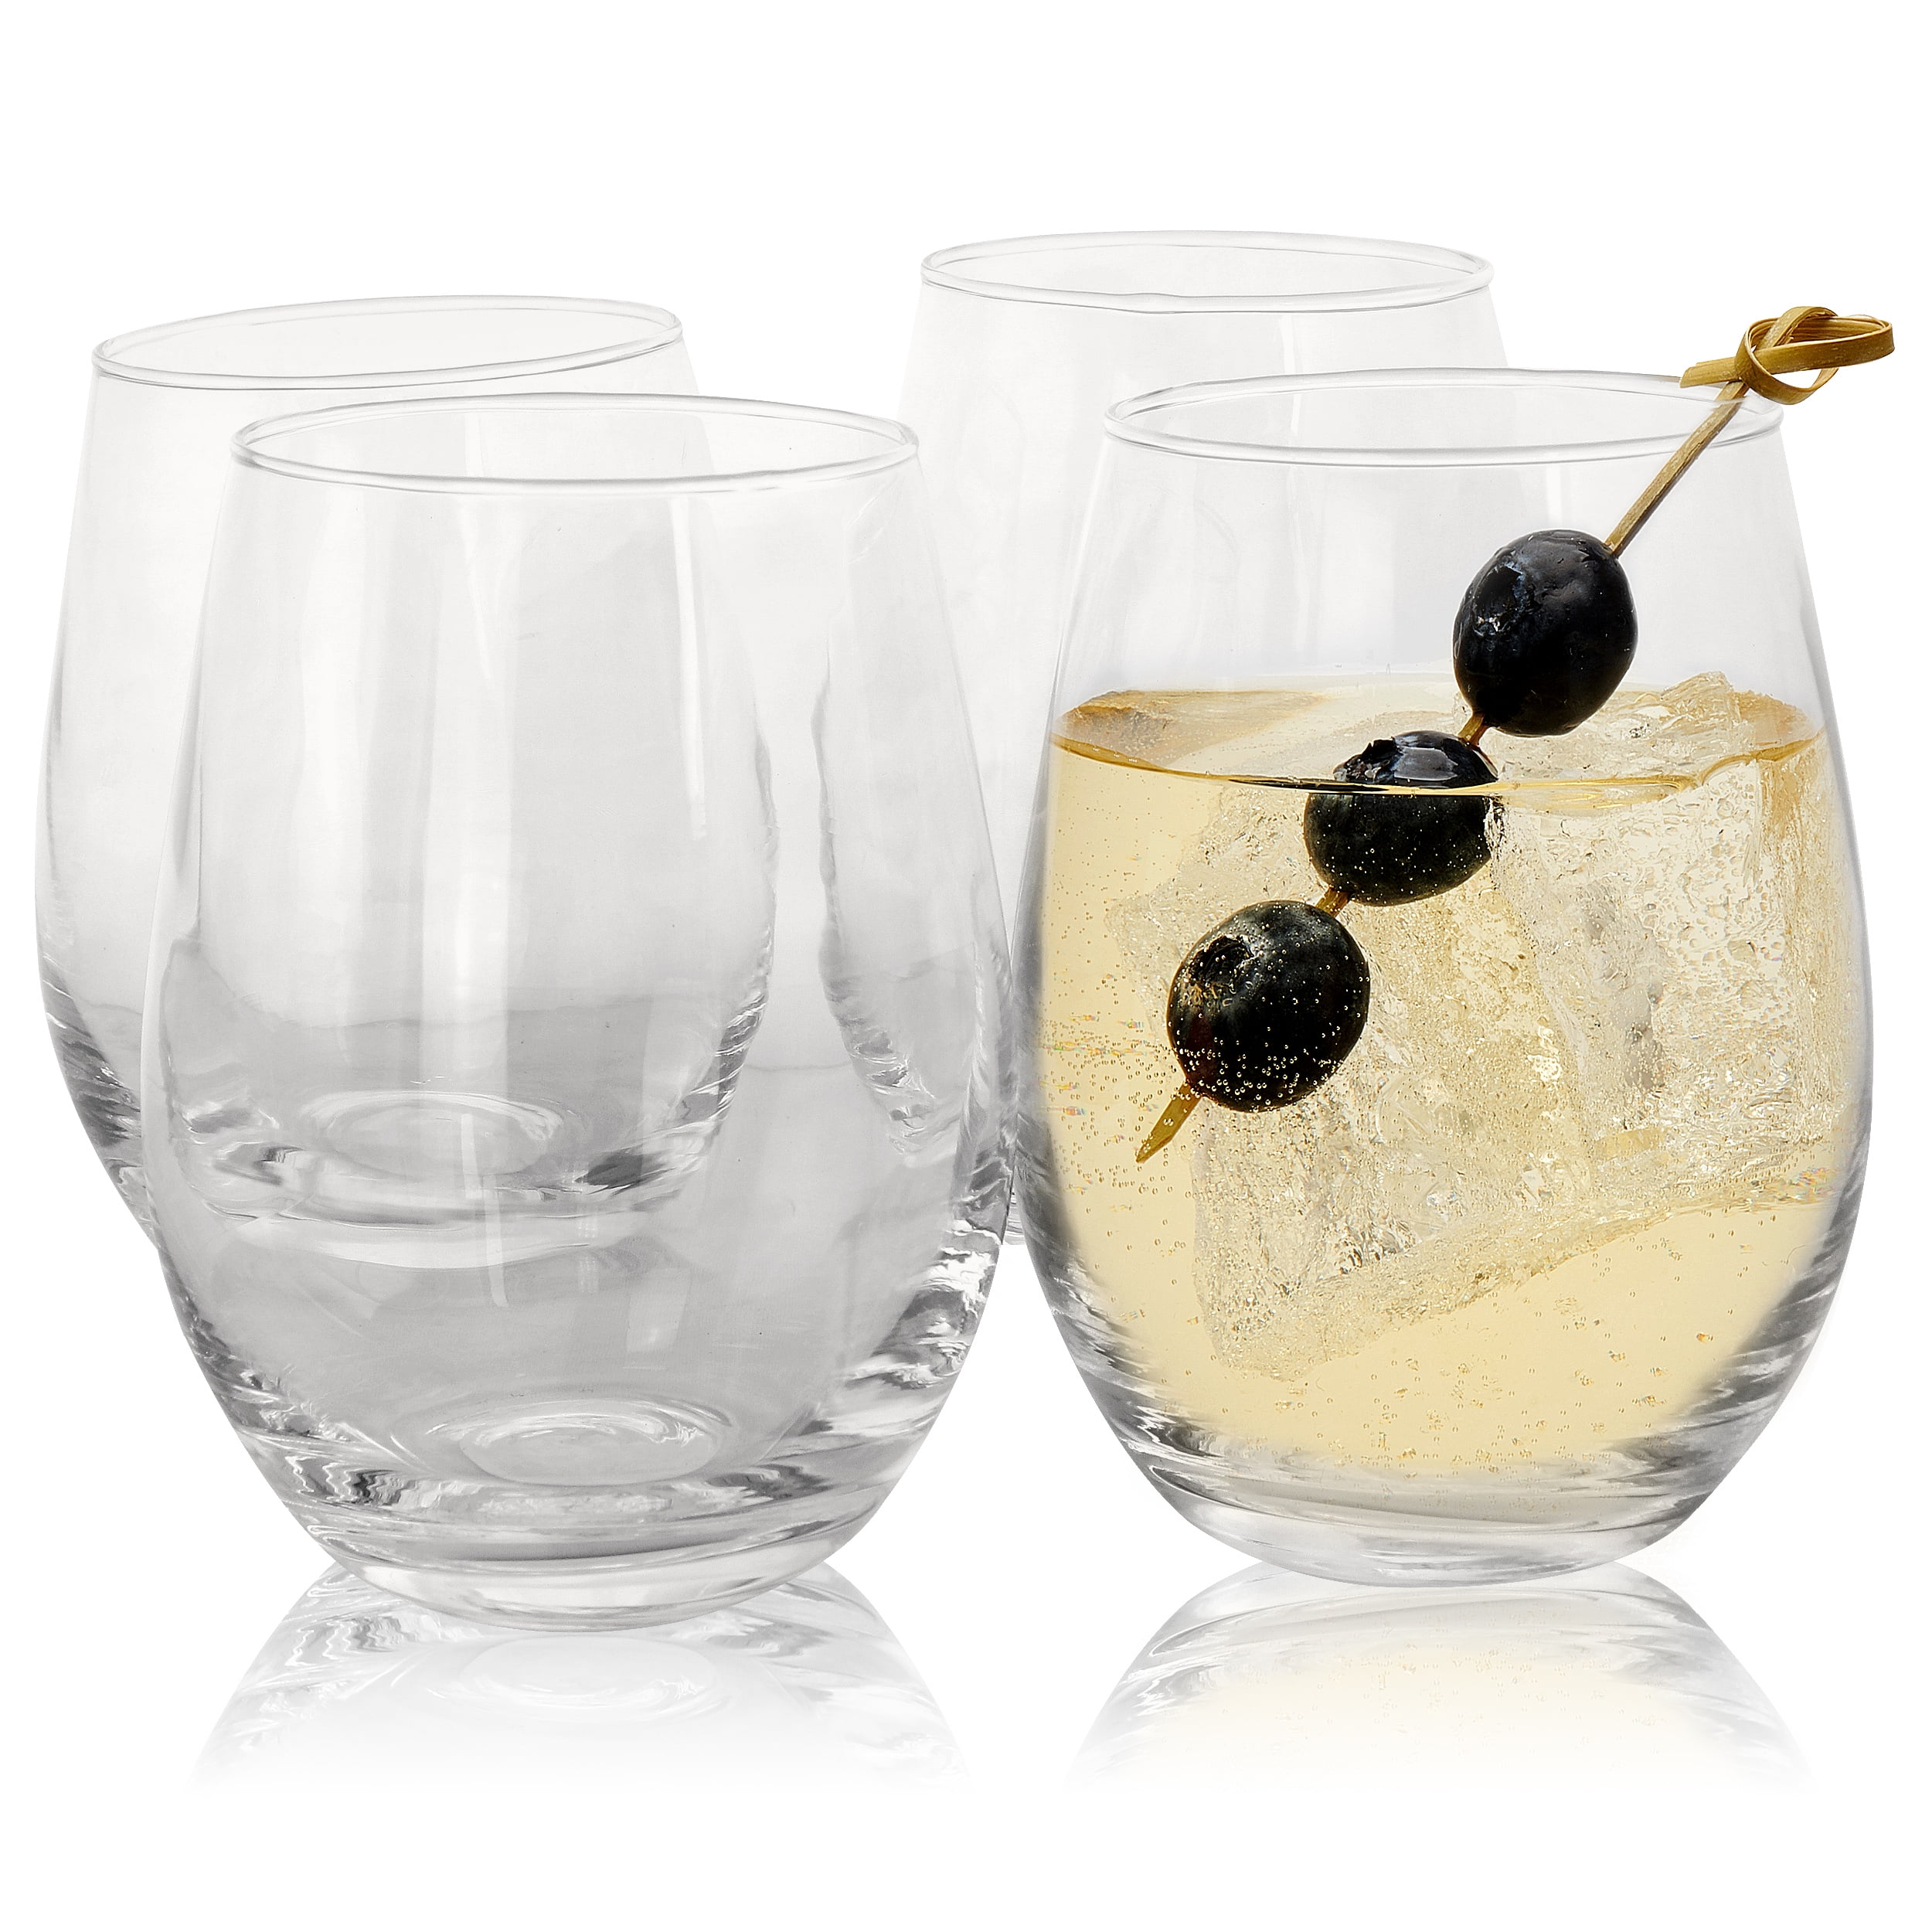 Vino Stemless Glass, Set of 4, 12 oz - On Sale - Bed Bath & Beyond -  21133867